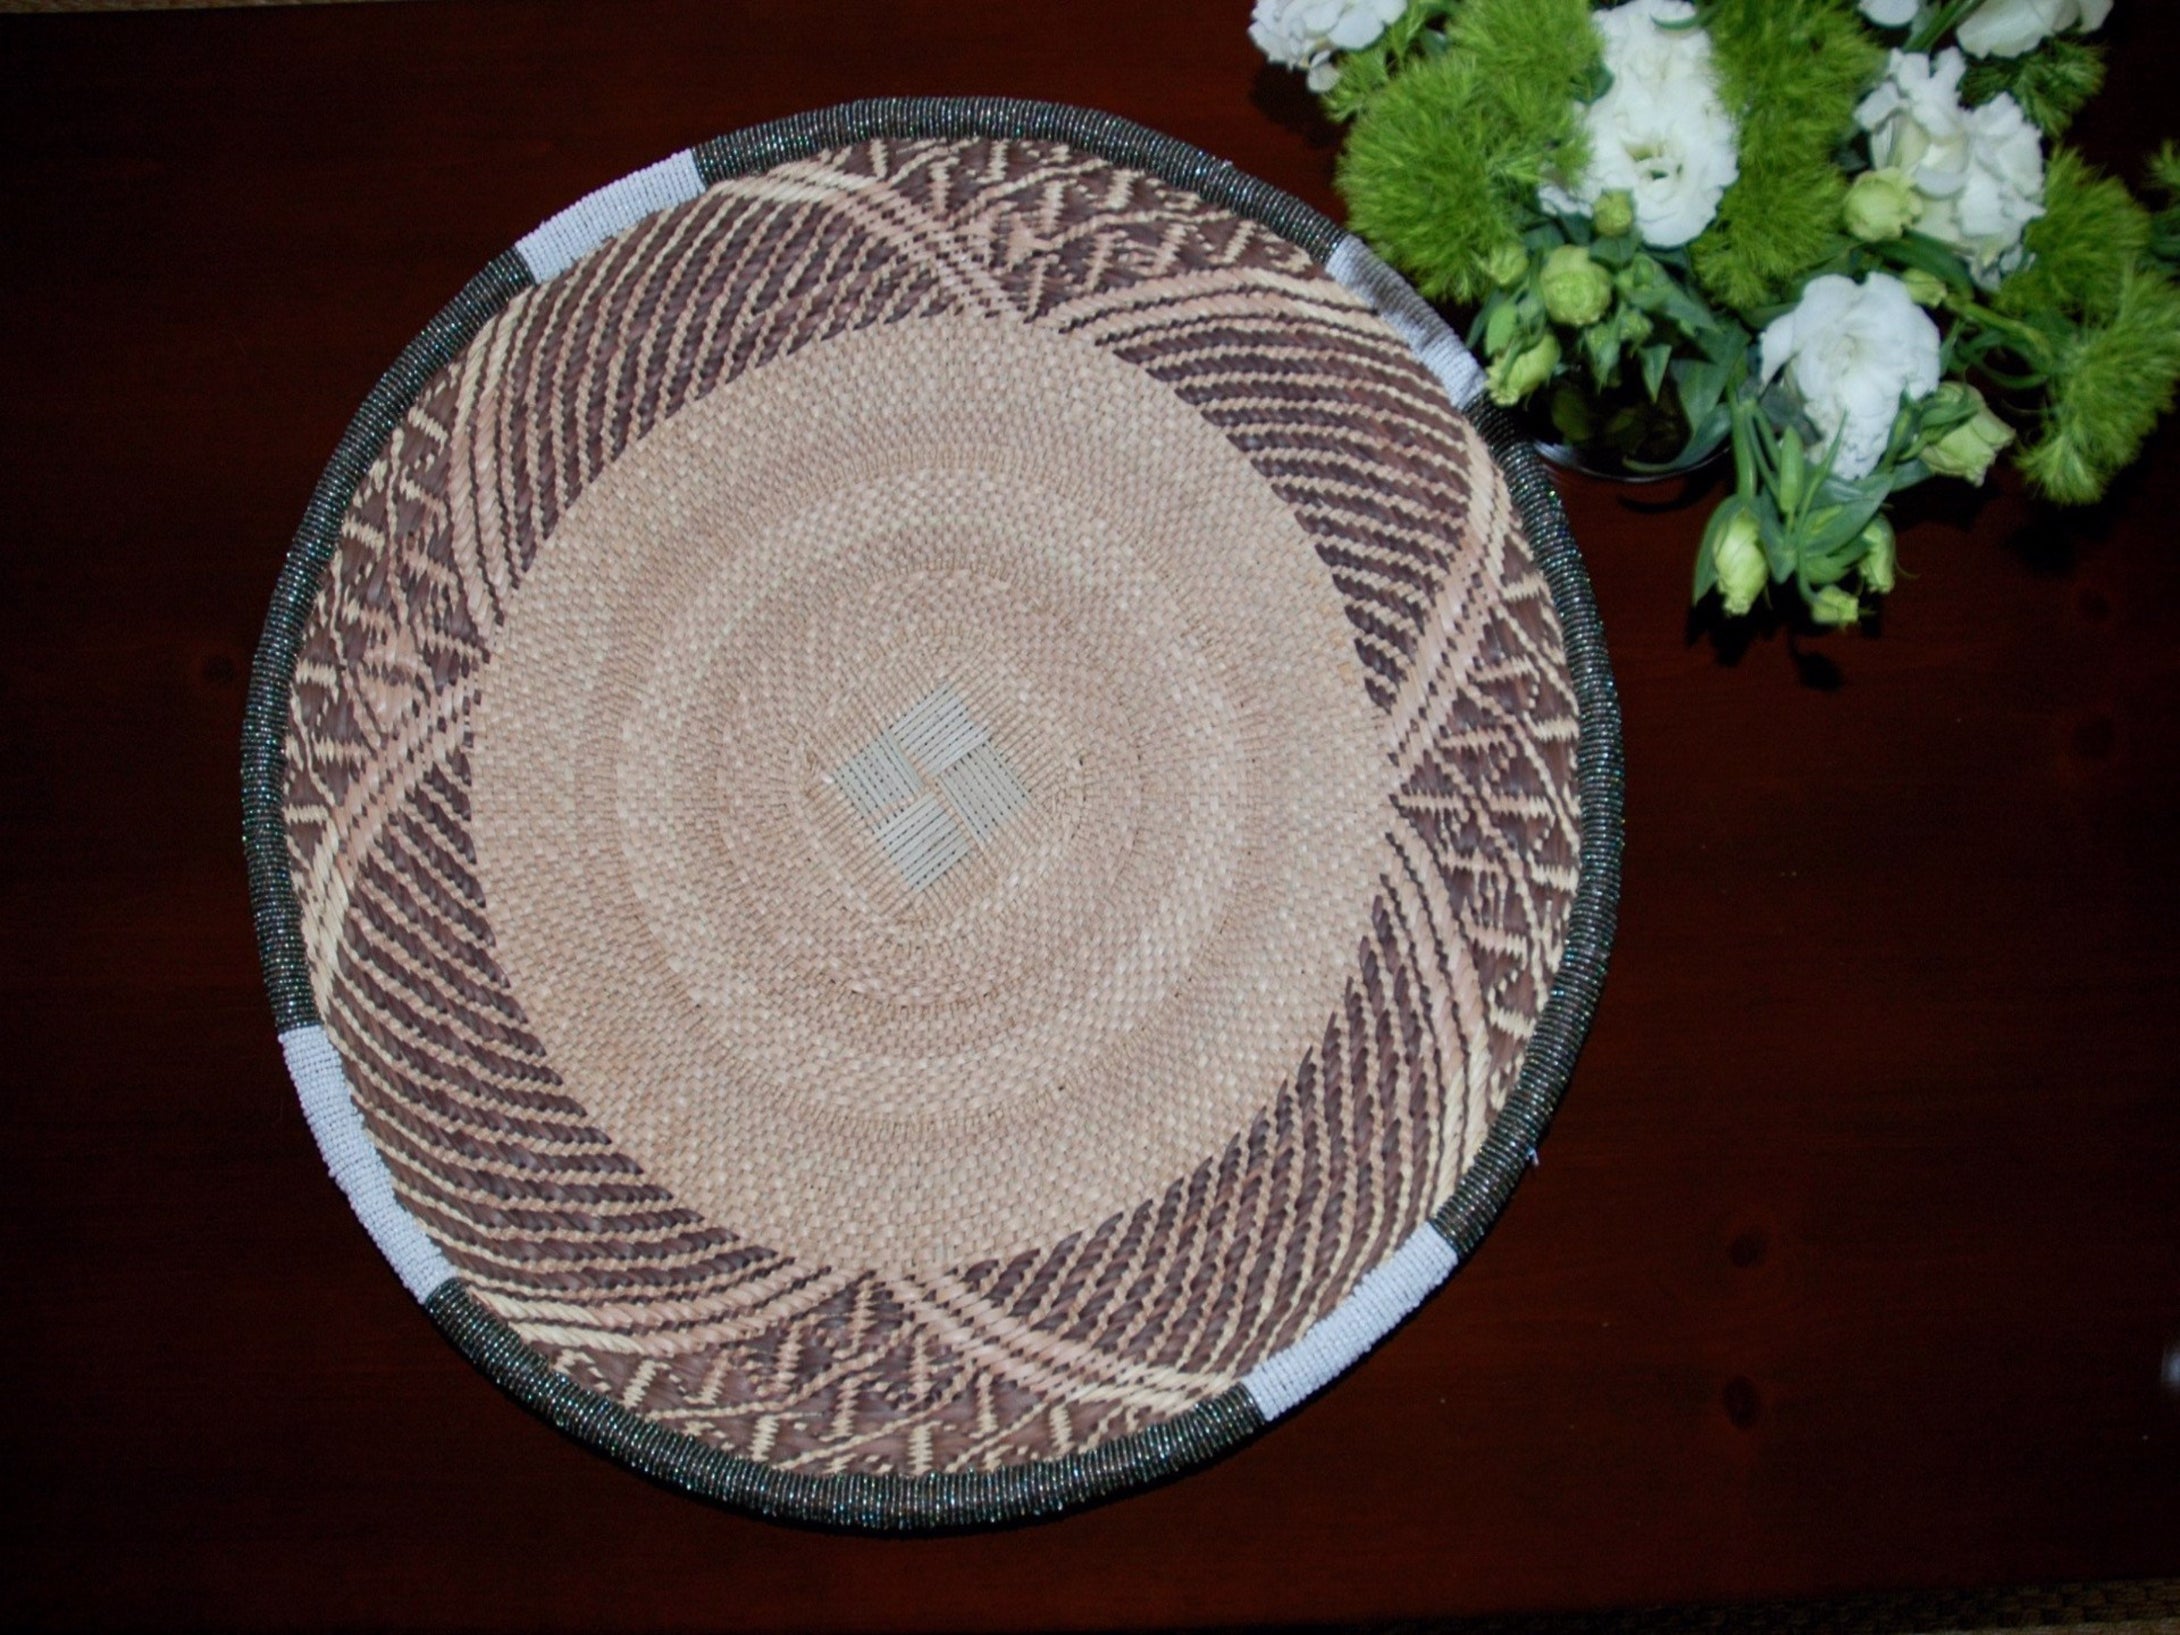 Medium handwoven basket with gray and white beading around the rim